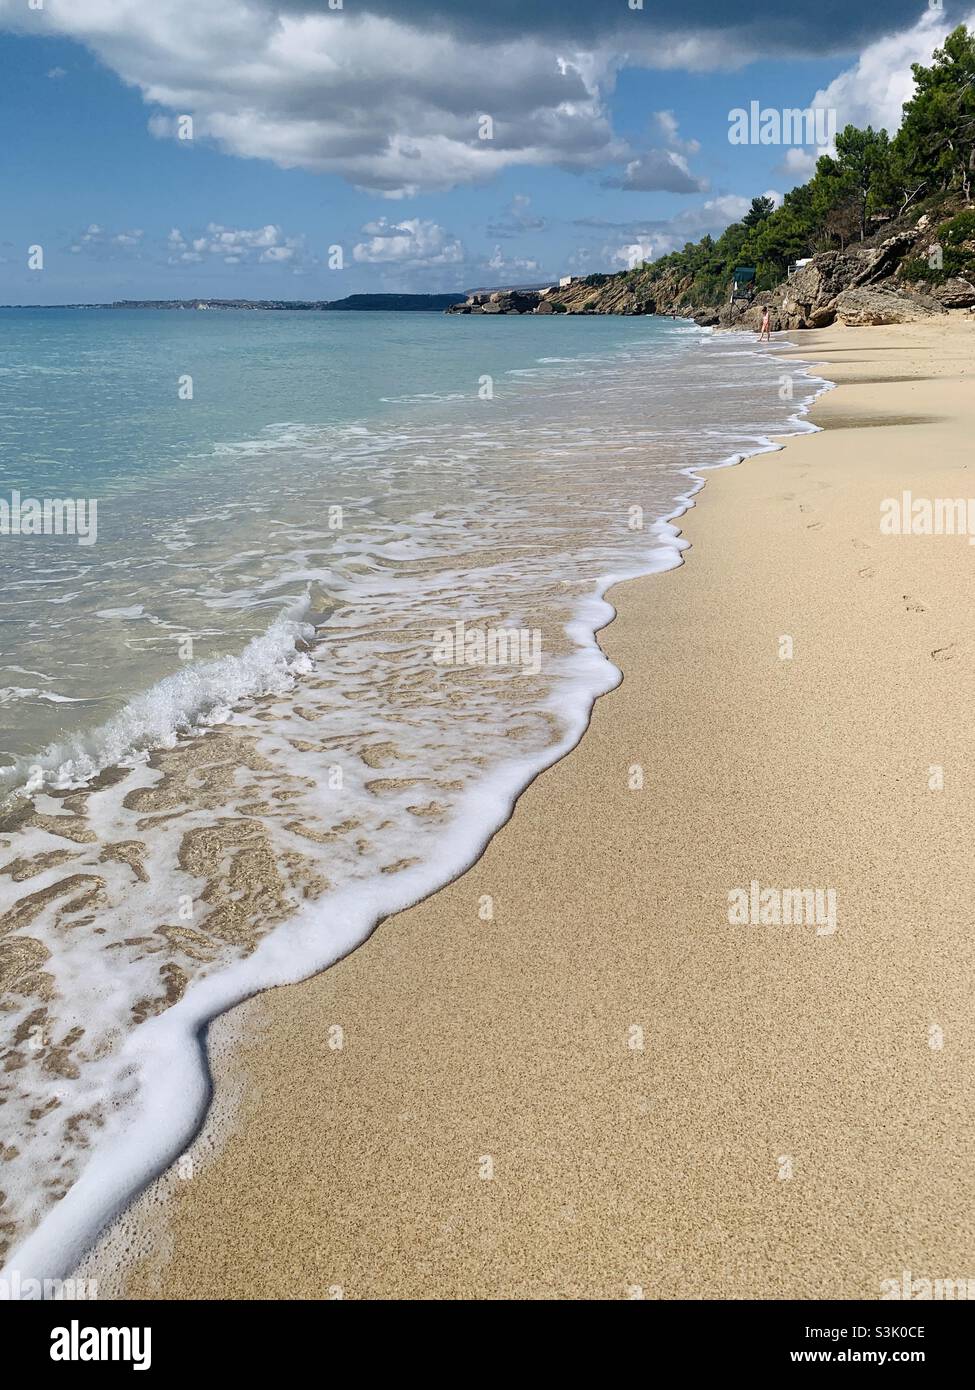 Makris gialos beach in kefalonia Stock Photo